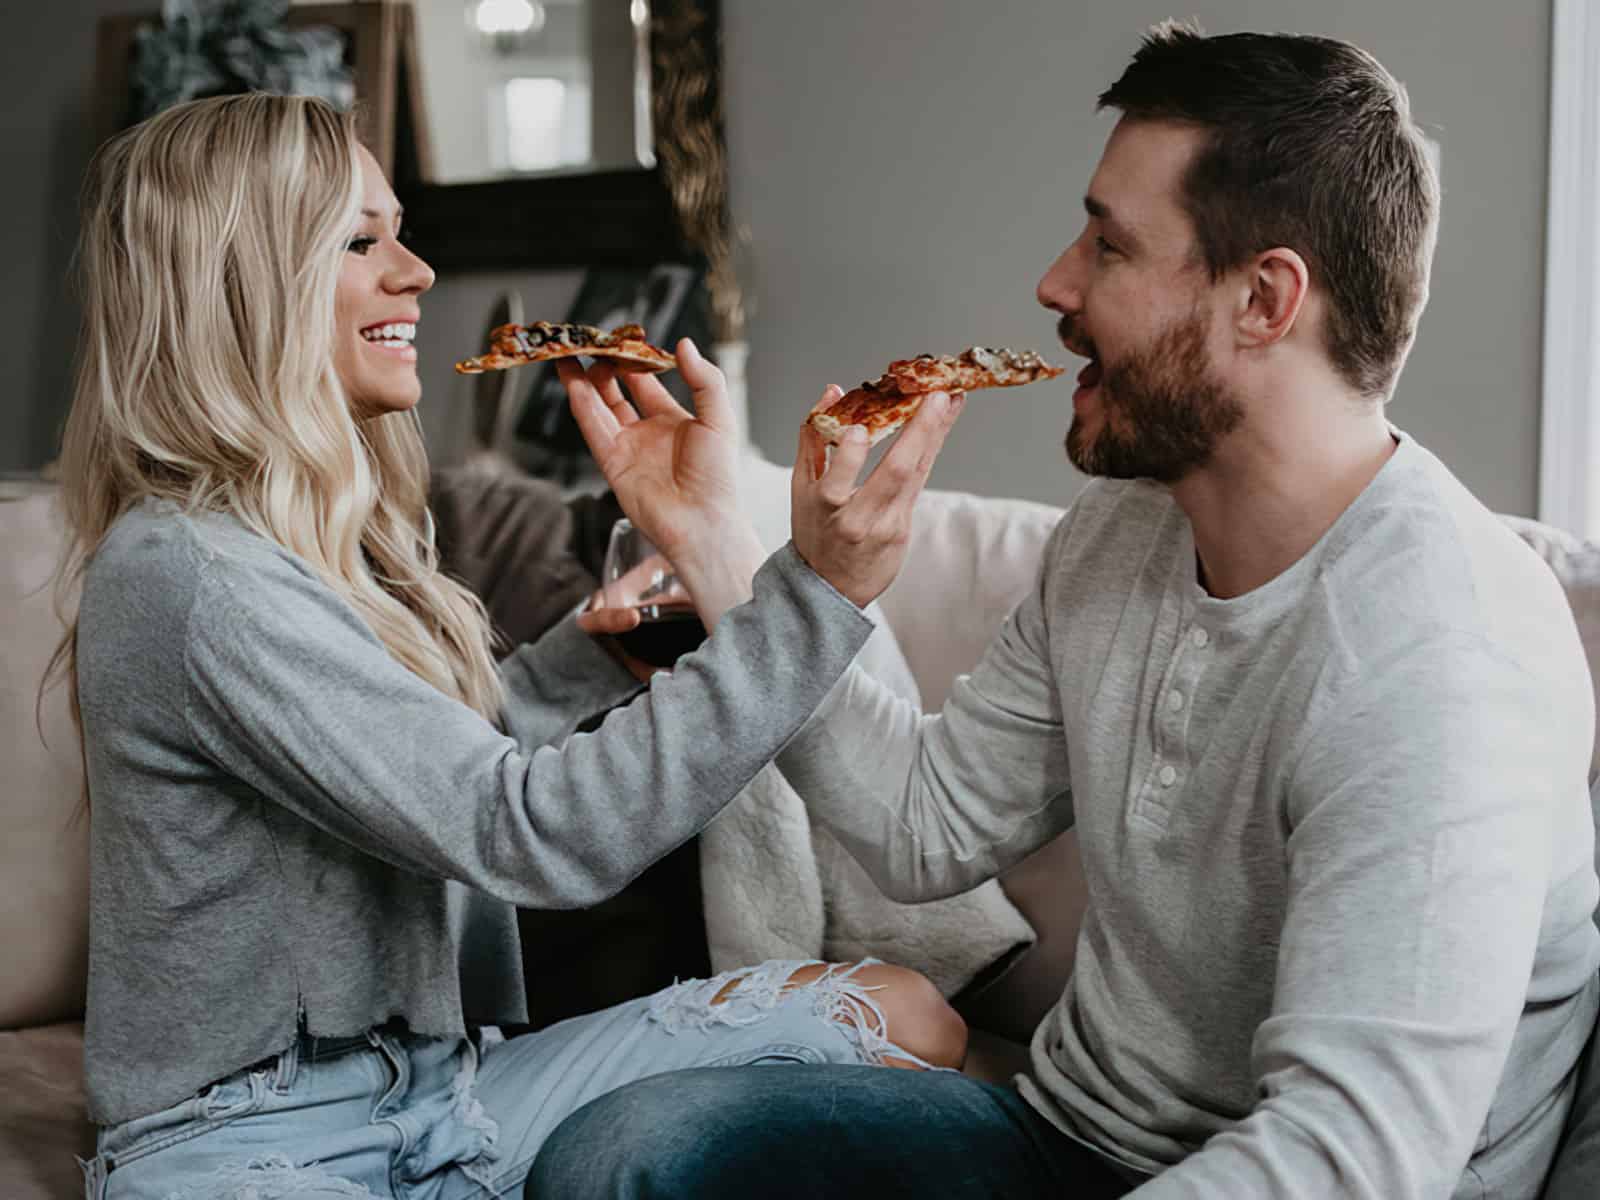 couple feeding each other pizza